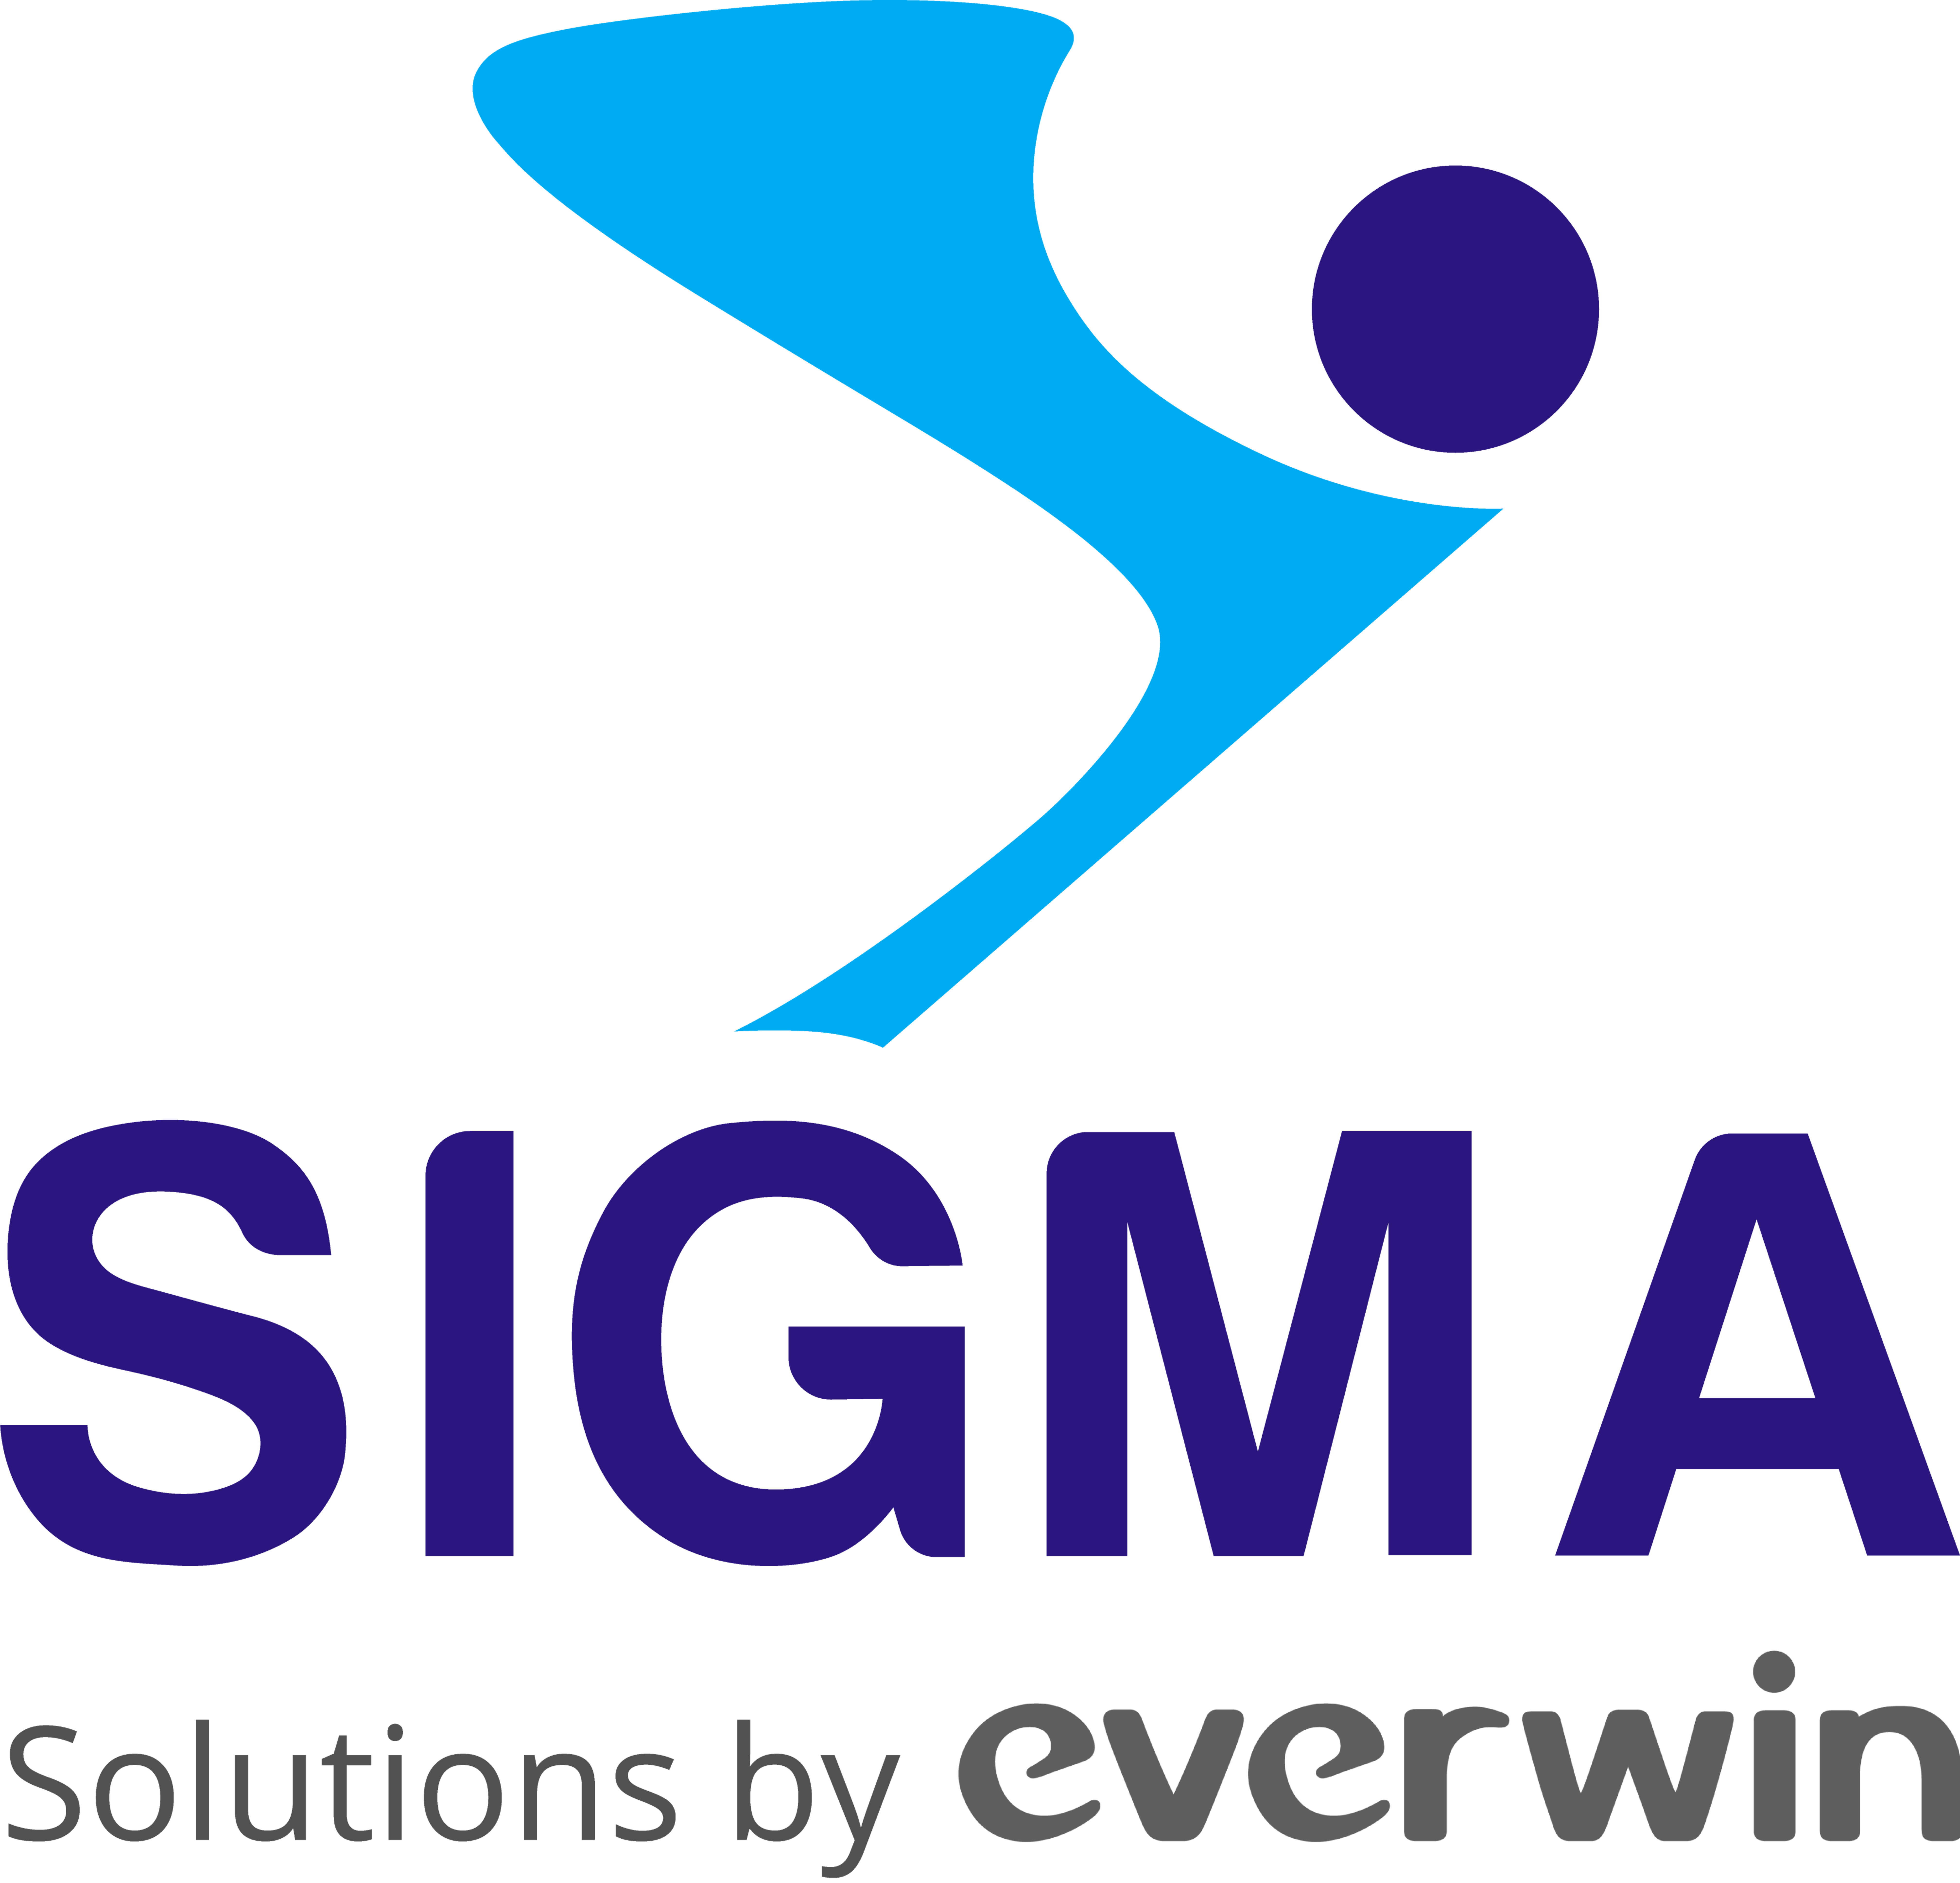 Logo sigma